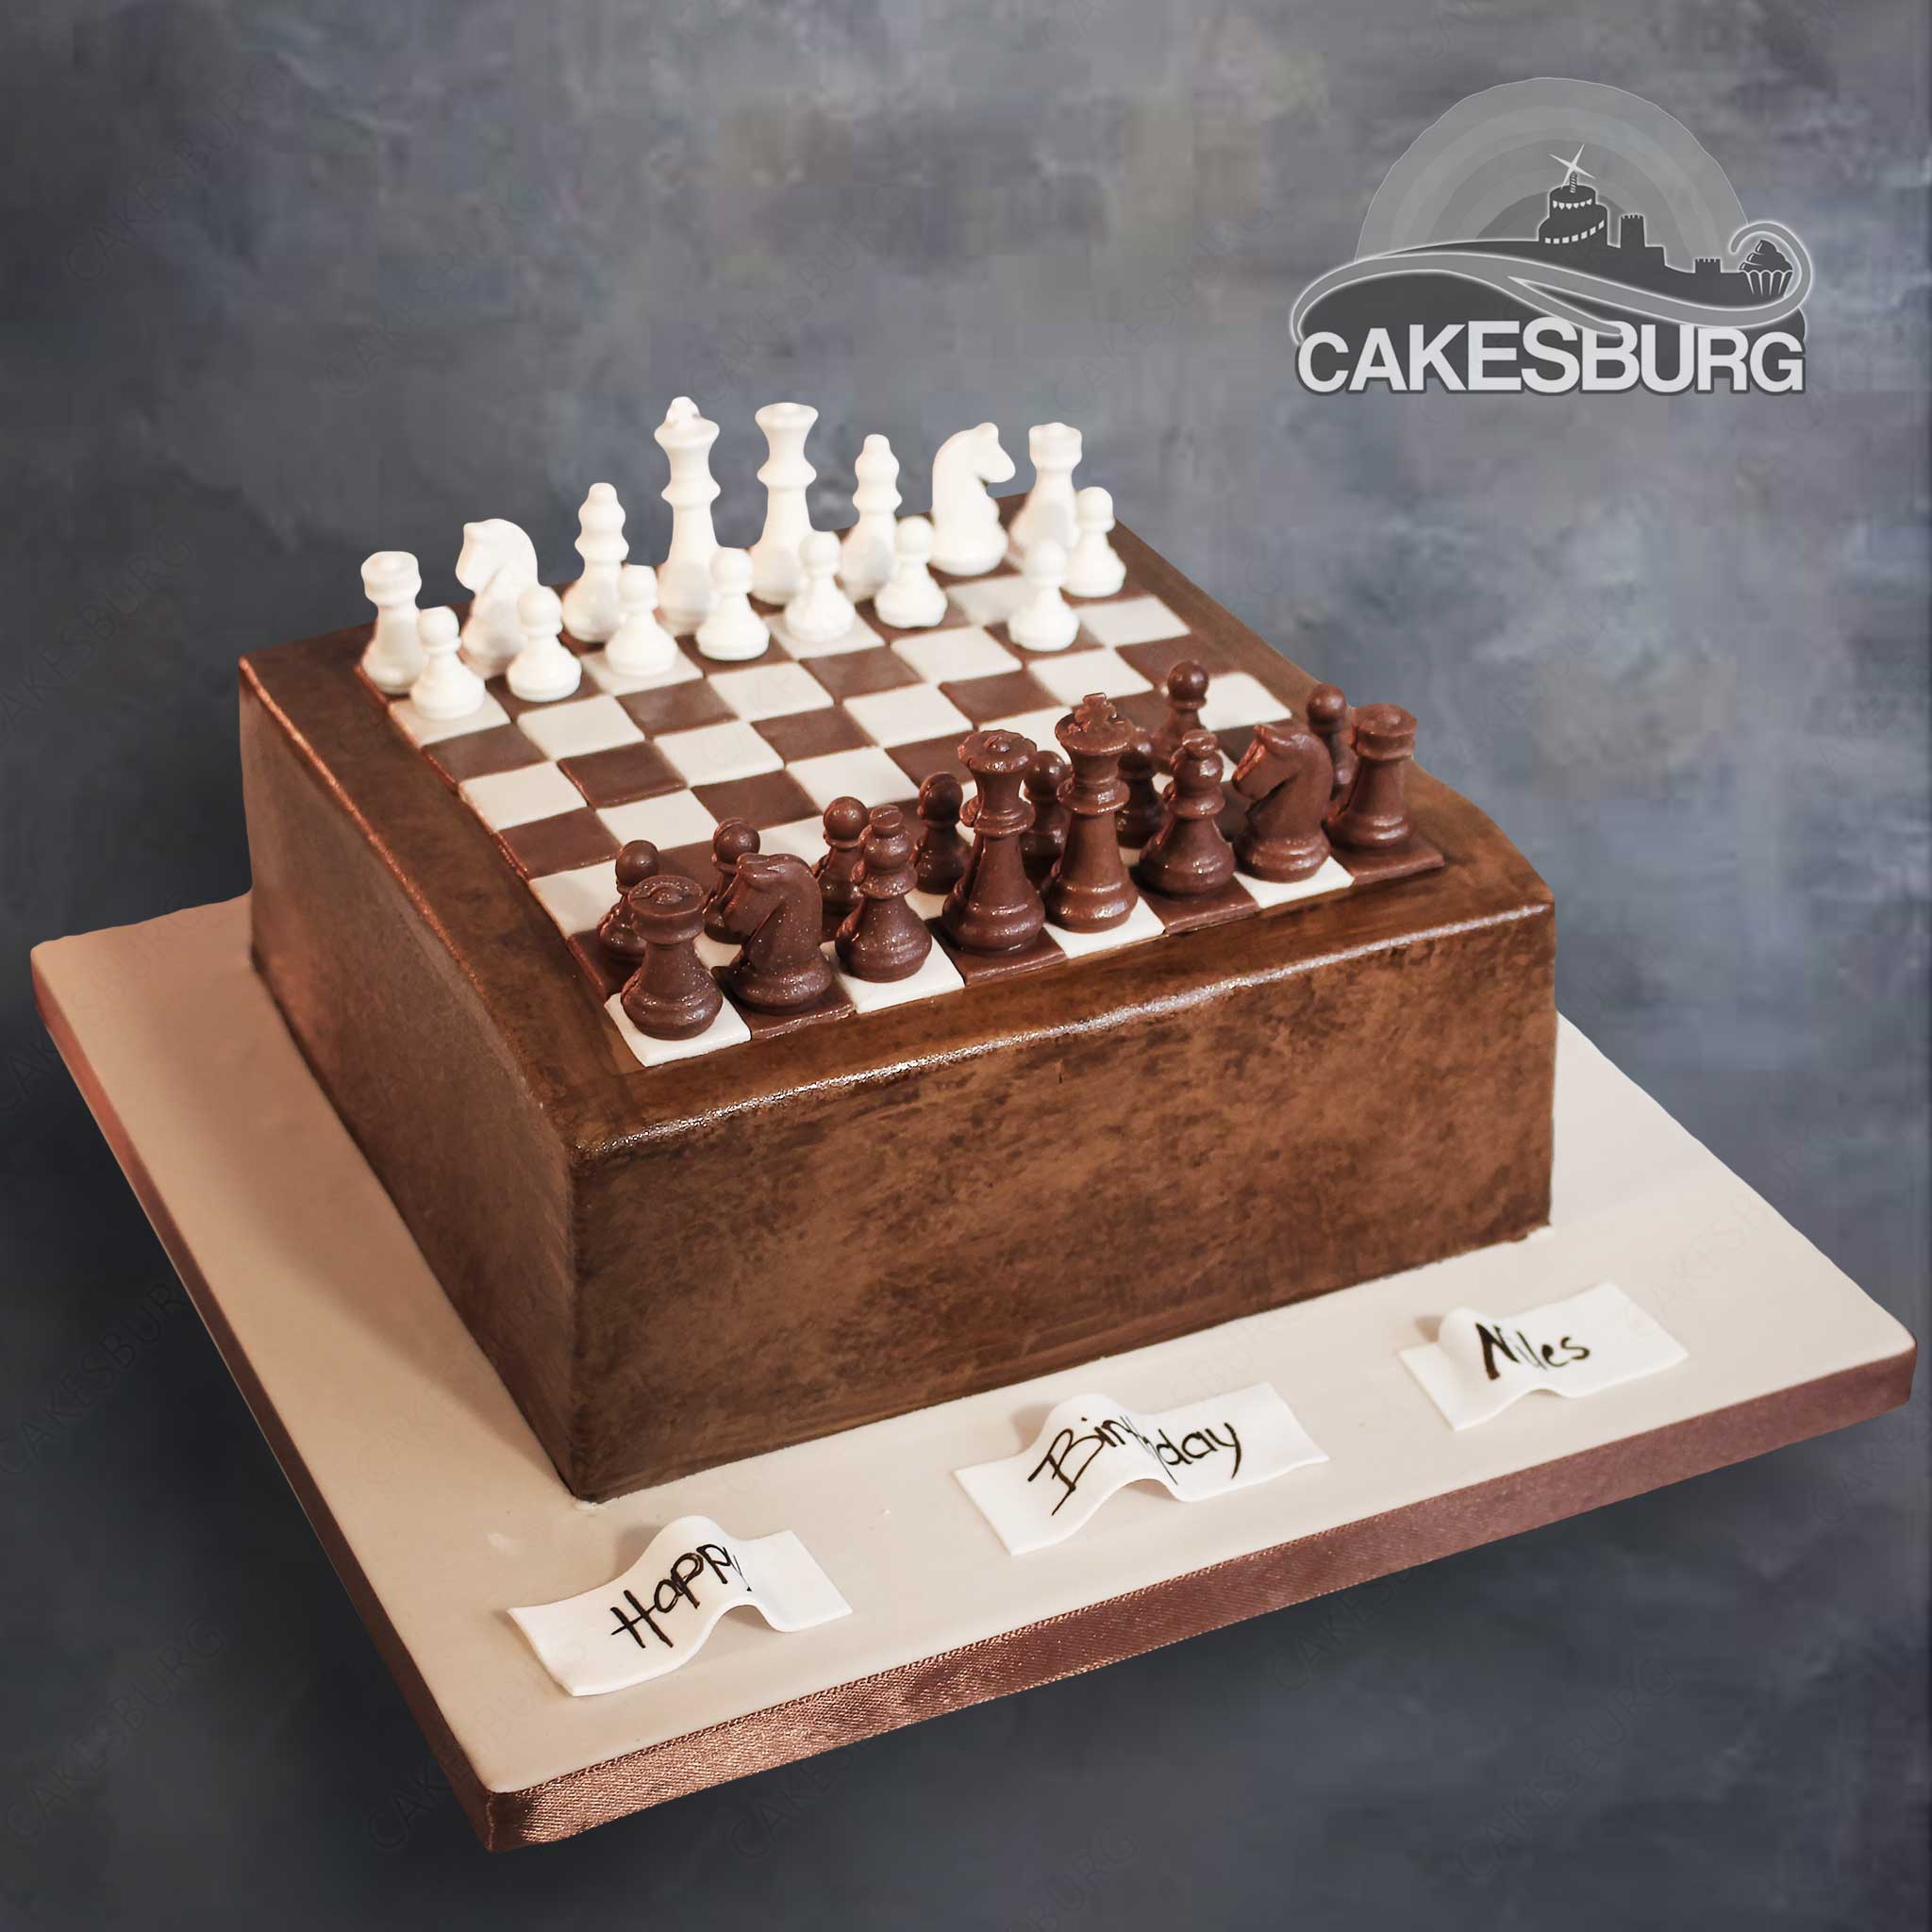 Patty Cakes Bakery: Chess Board Cake